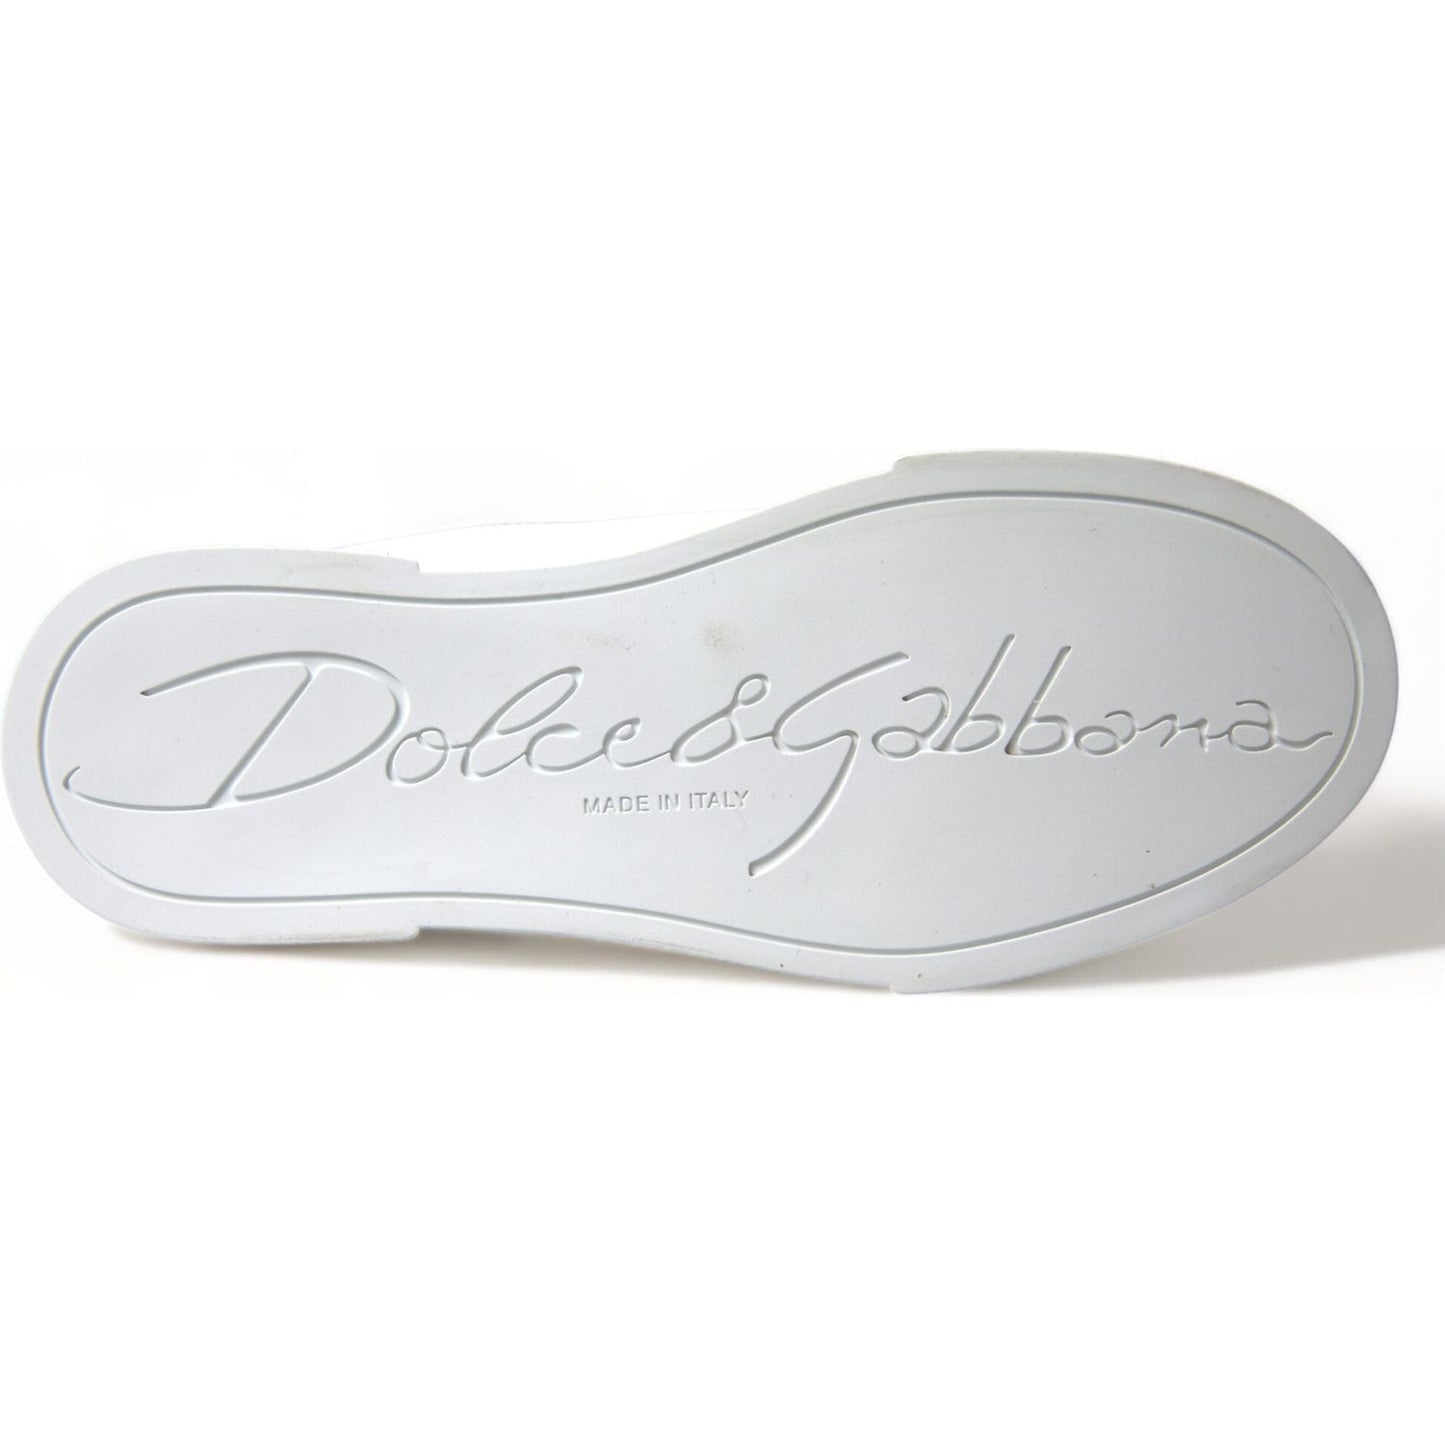 Dolce & Gabbana Chic White Portofino Leather Sneakers white-love-patch-portofino-classic-sneakers-shoes 465A3322-BG-scaled-a8970e21-5de.jpg